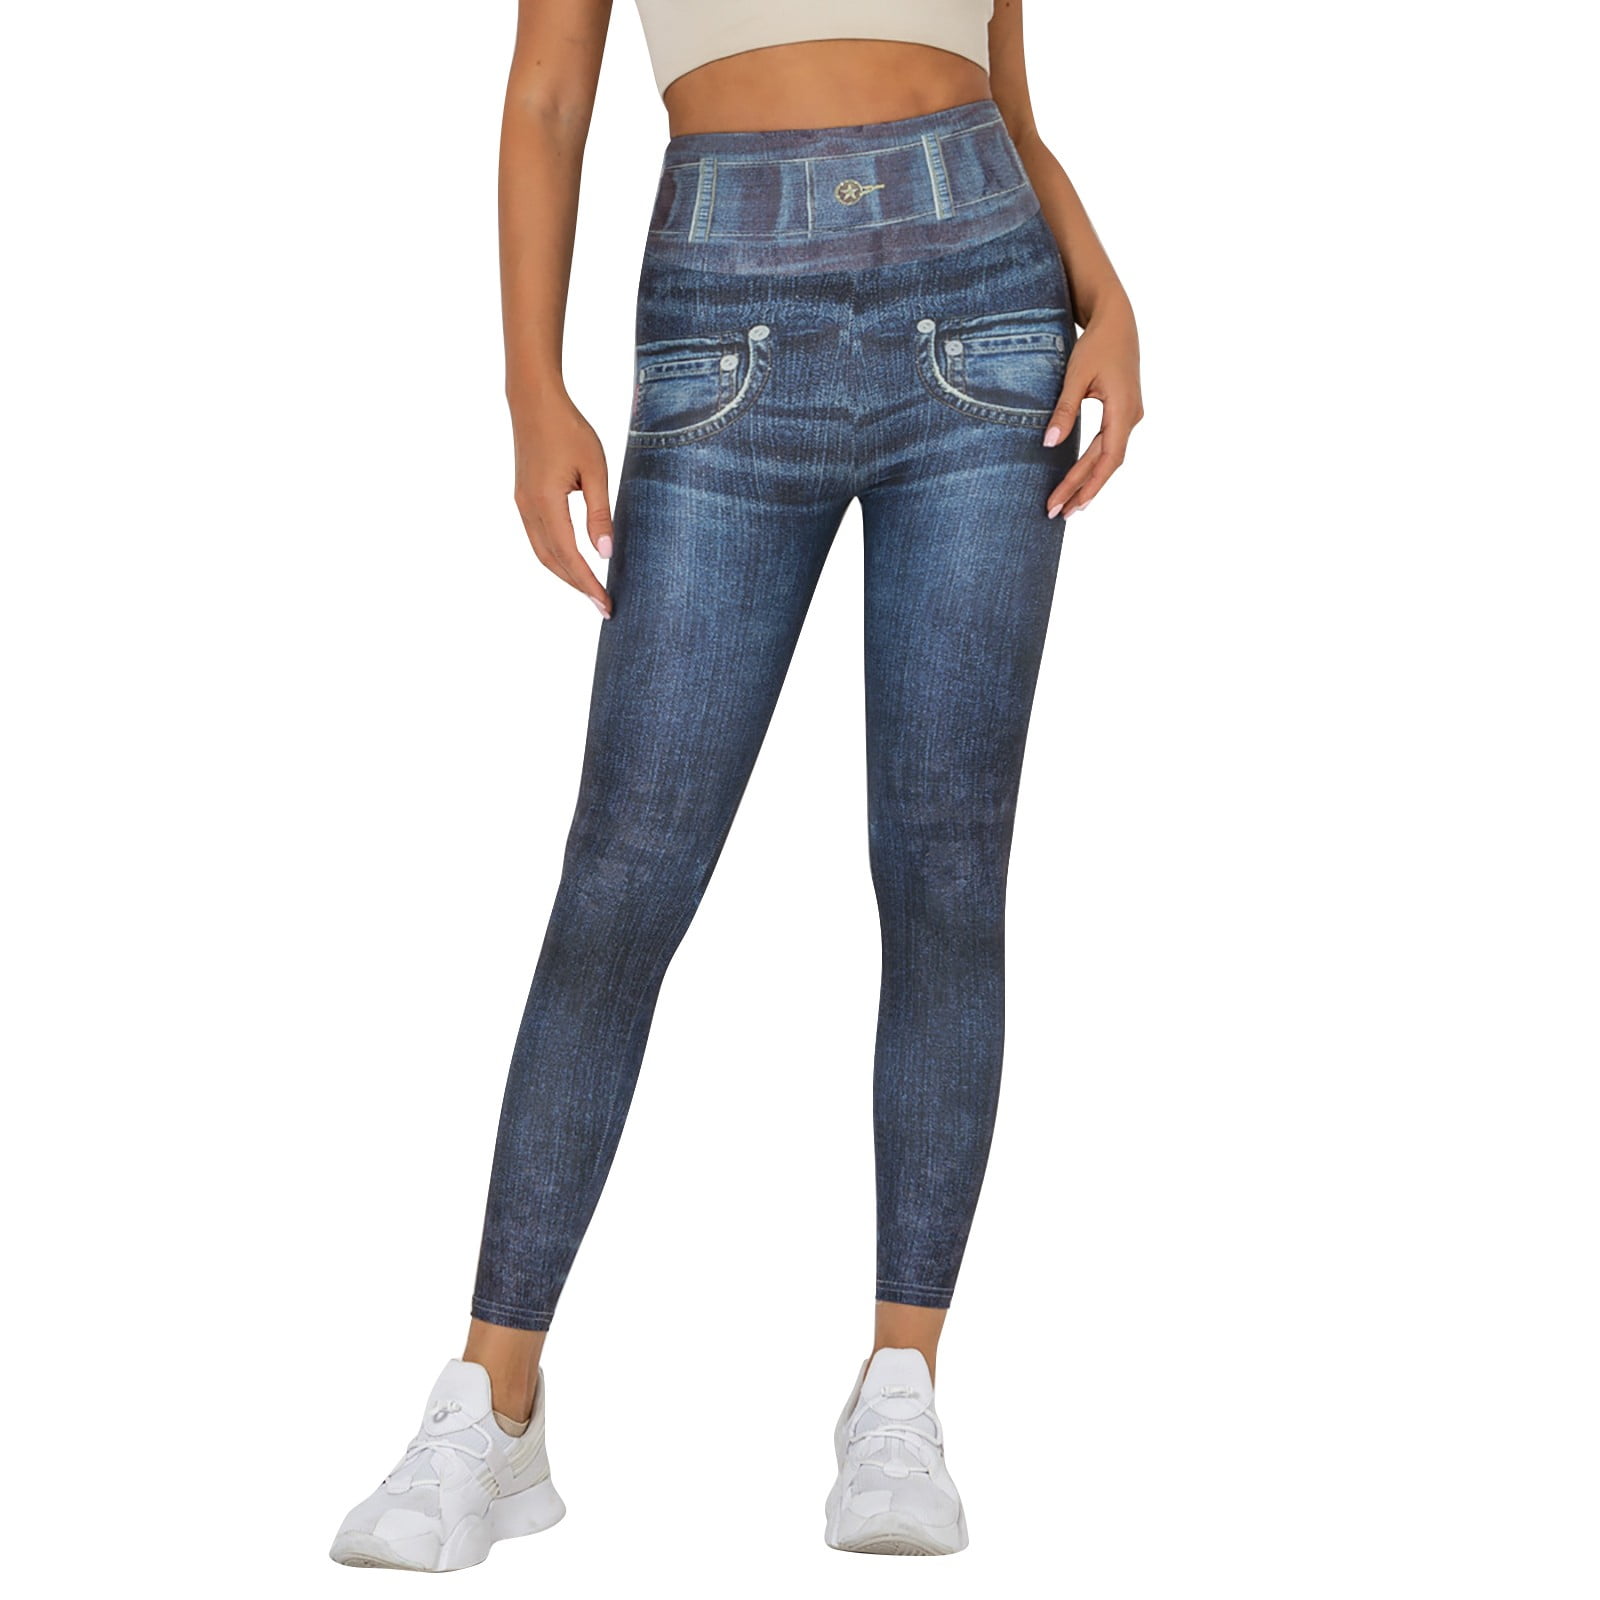 Frontwalk Women High Waist Imitation Denim Fake Jeans Elastic